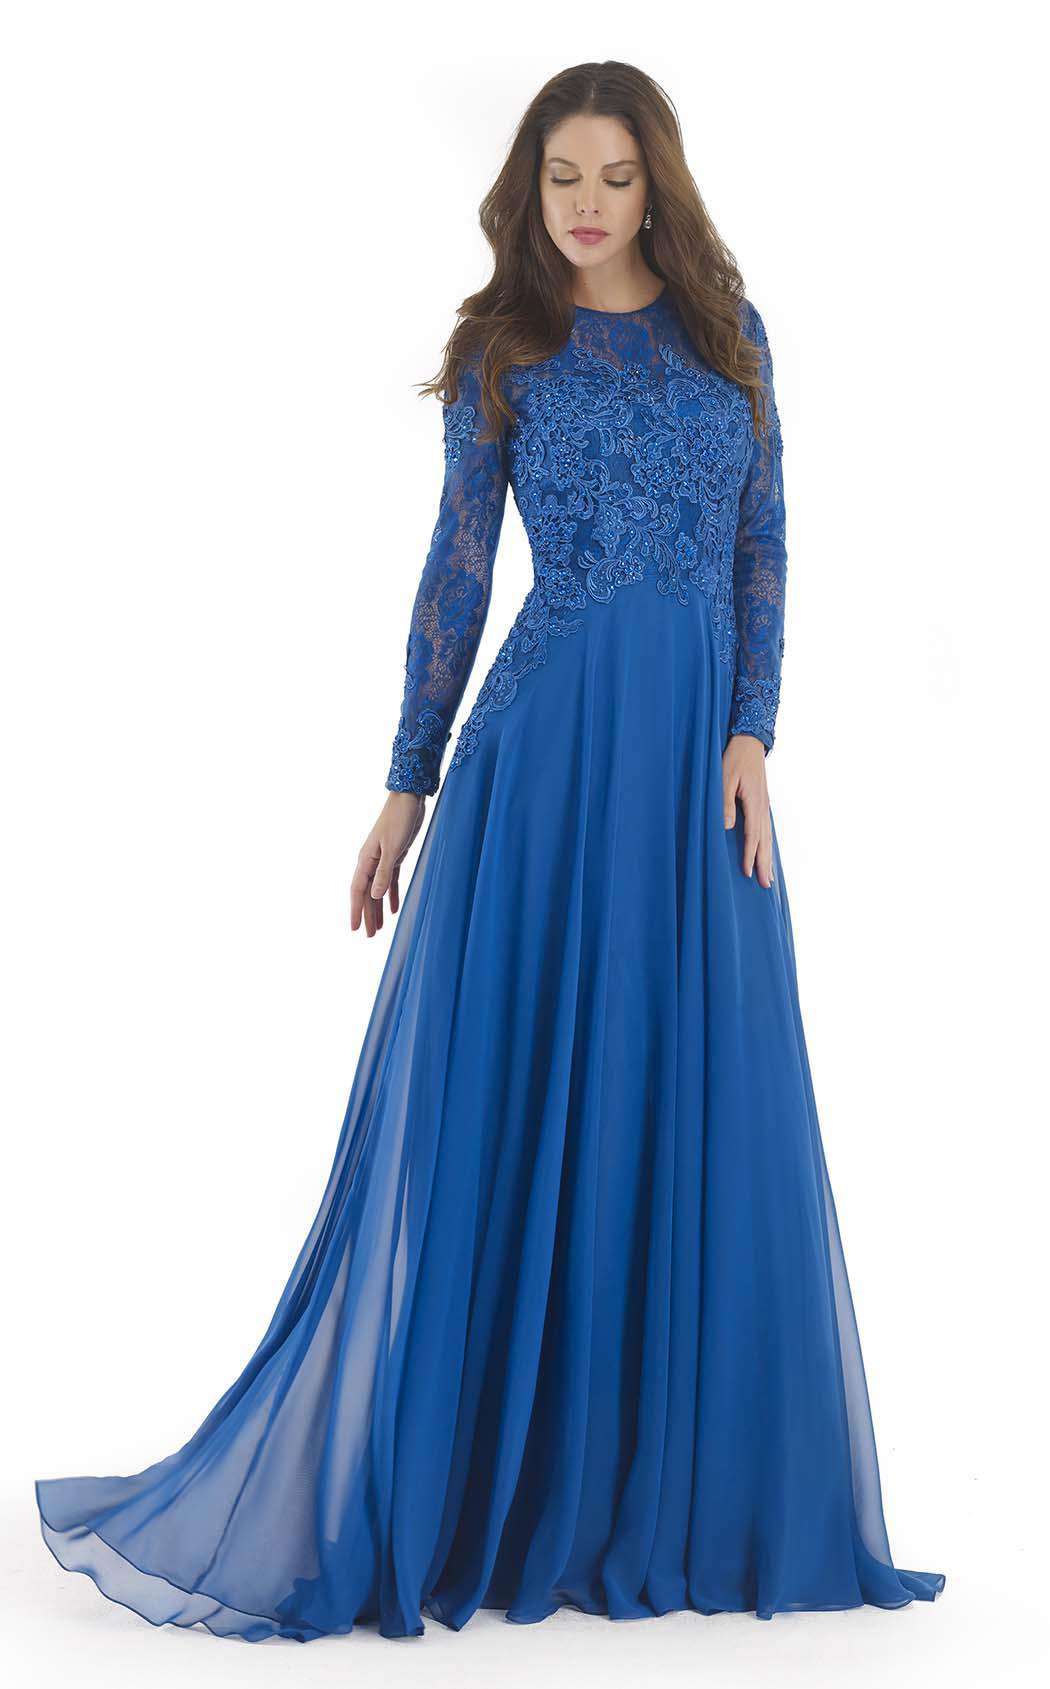 Morrell Maxie 15740 Dress | Buy Designer Gowns & Evening Dresses ...